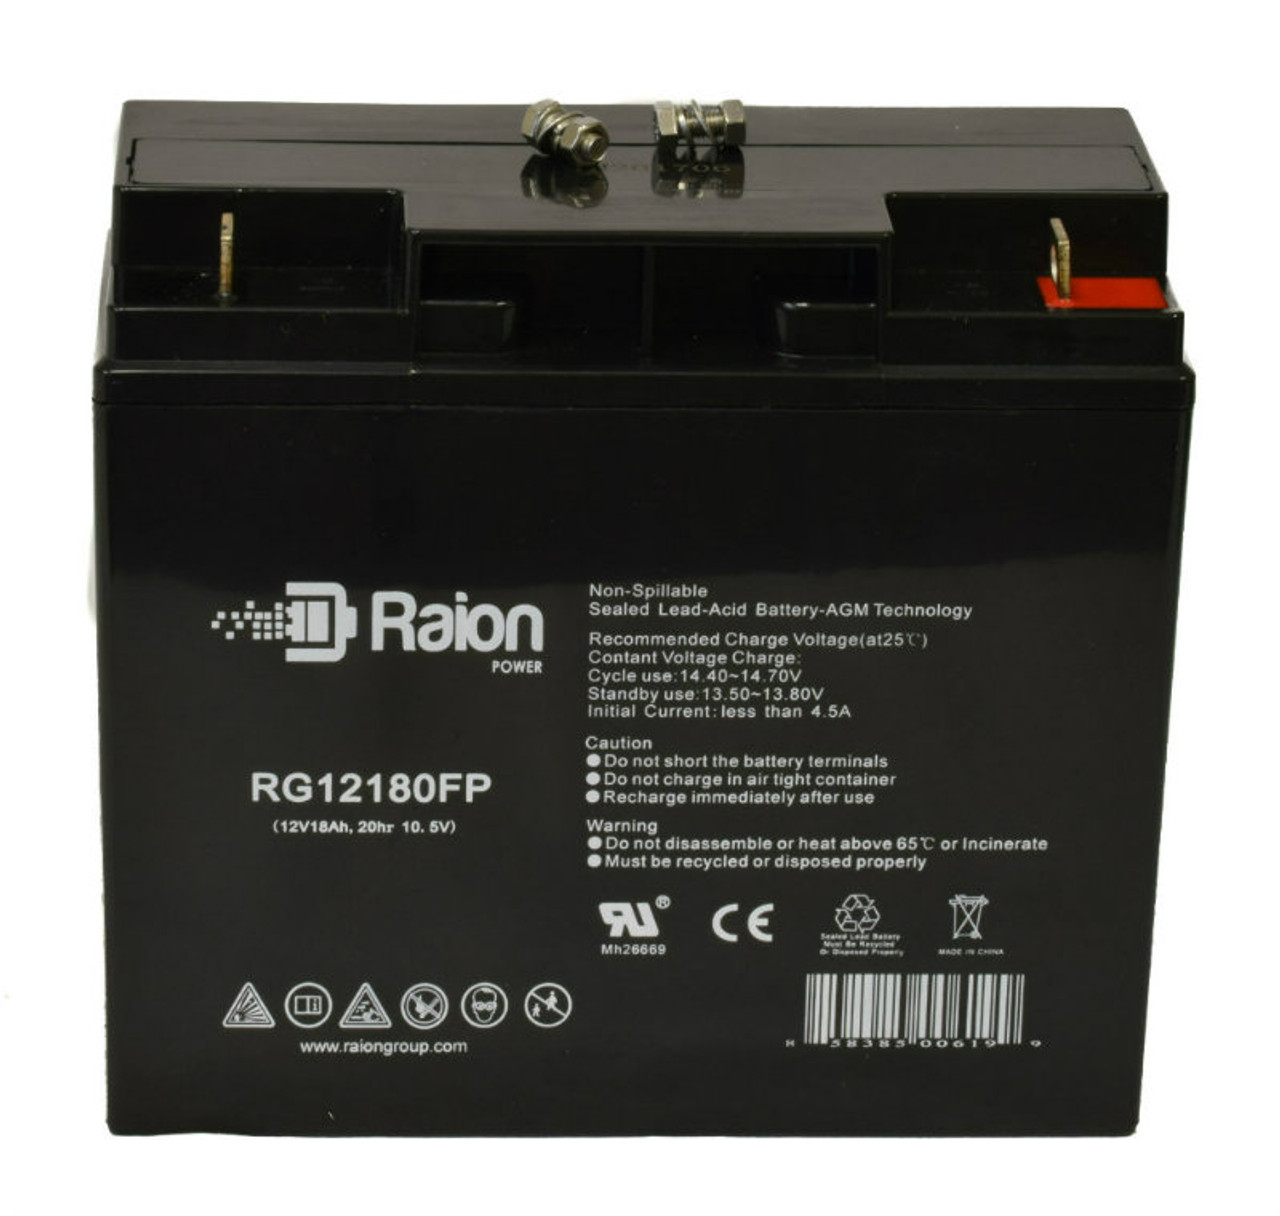 Raion Power RG12180FP 12V 18Ah Lead Acid Battery for Merits Health Products P120-Feather